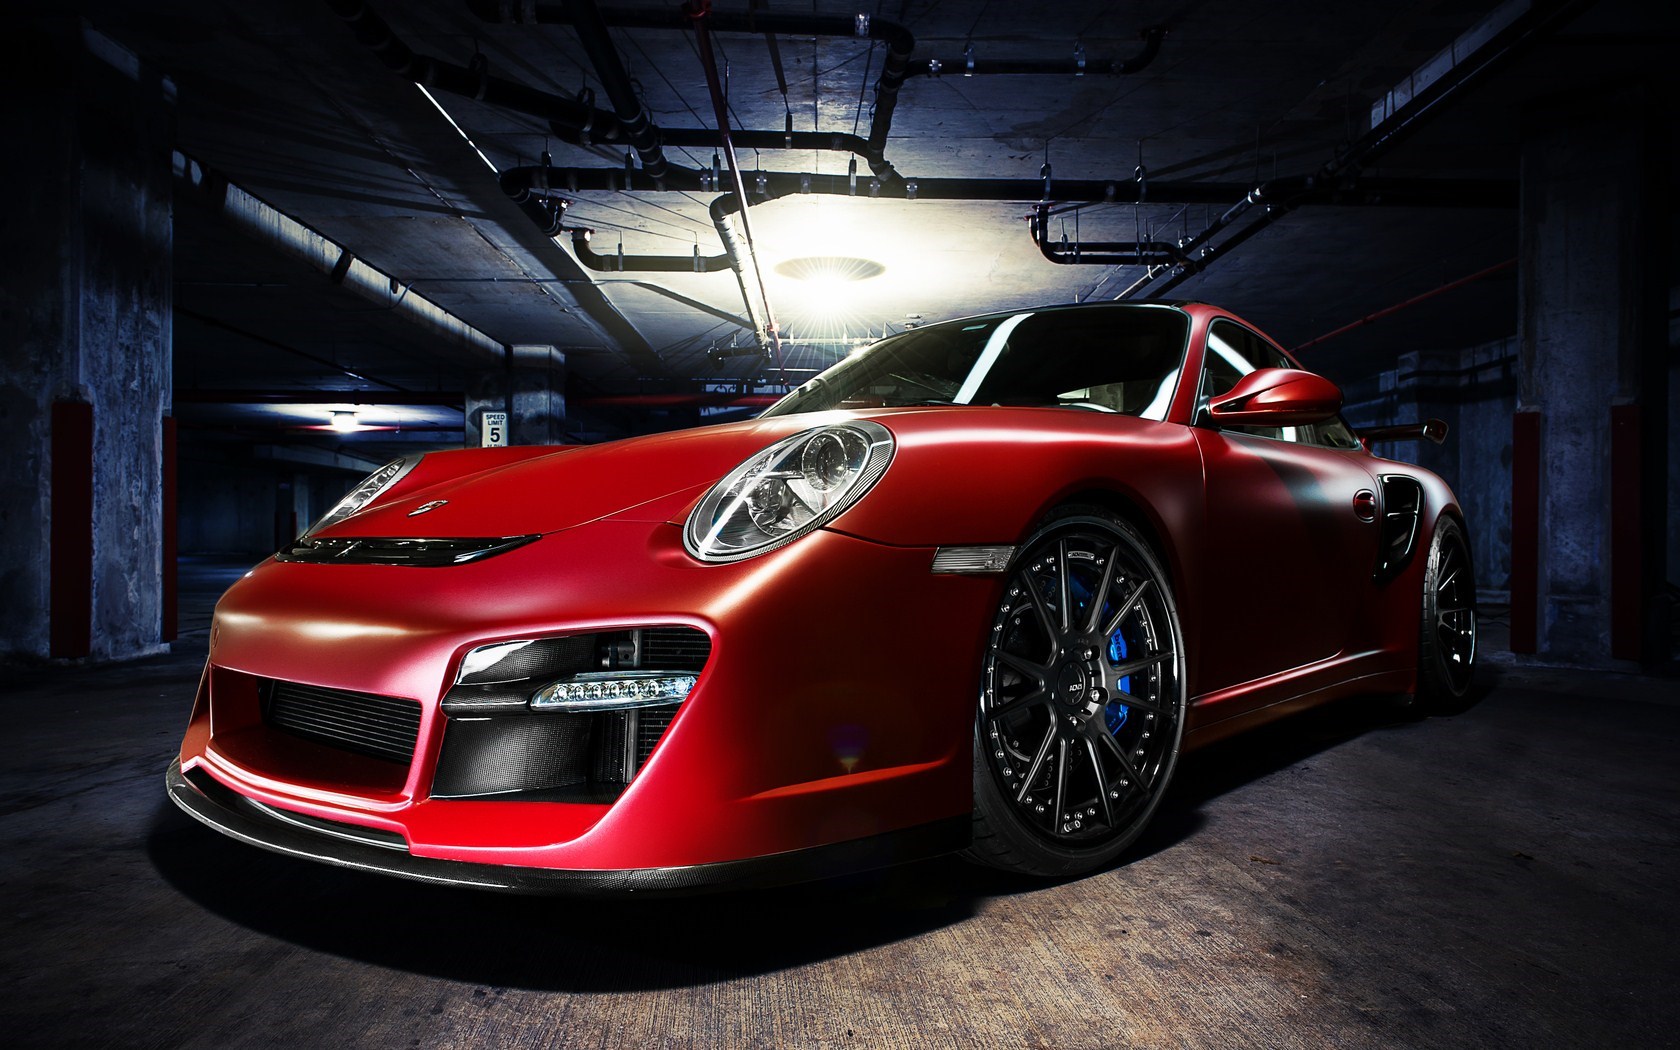 Wallpaper Cars Porsche Turbo Red Car Garage Photo